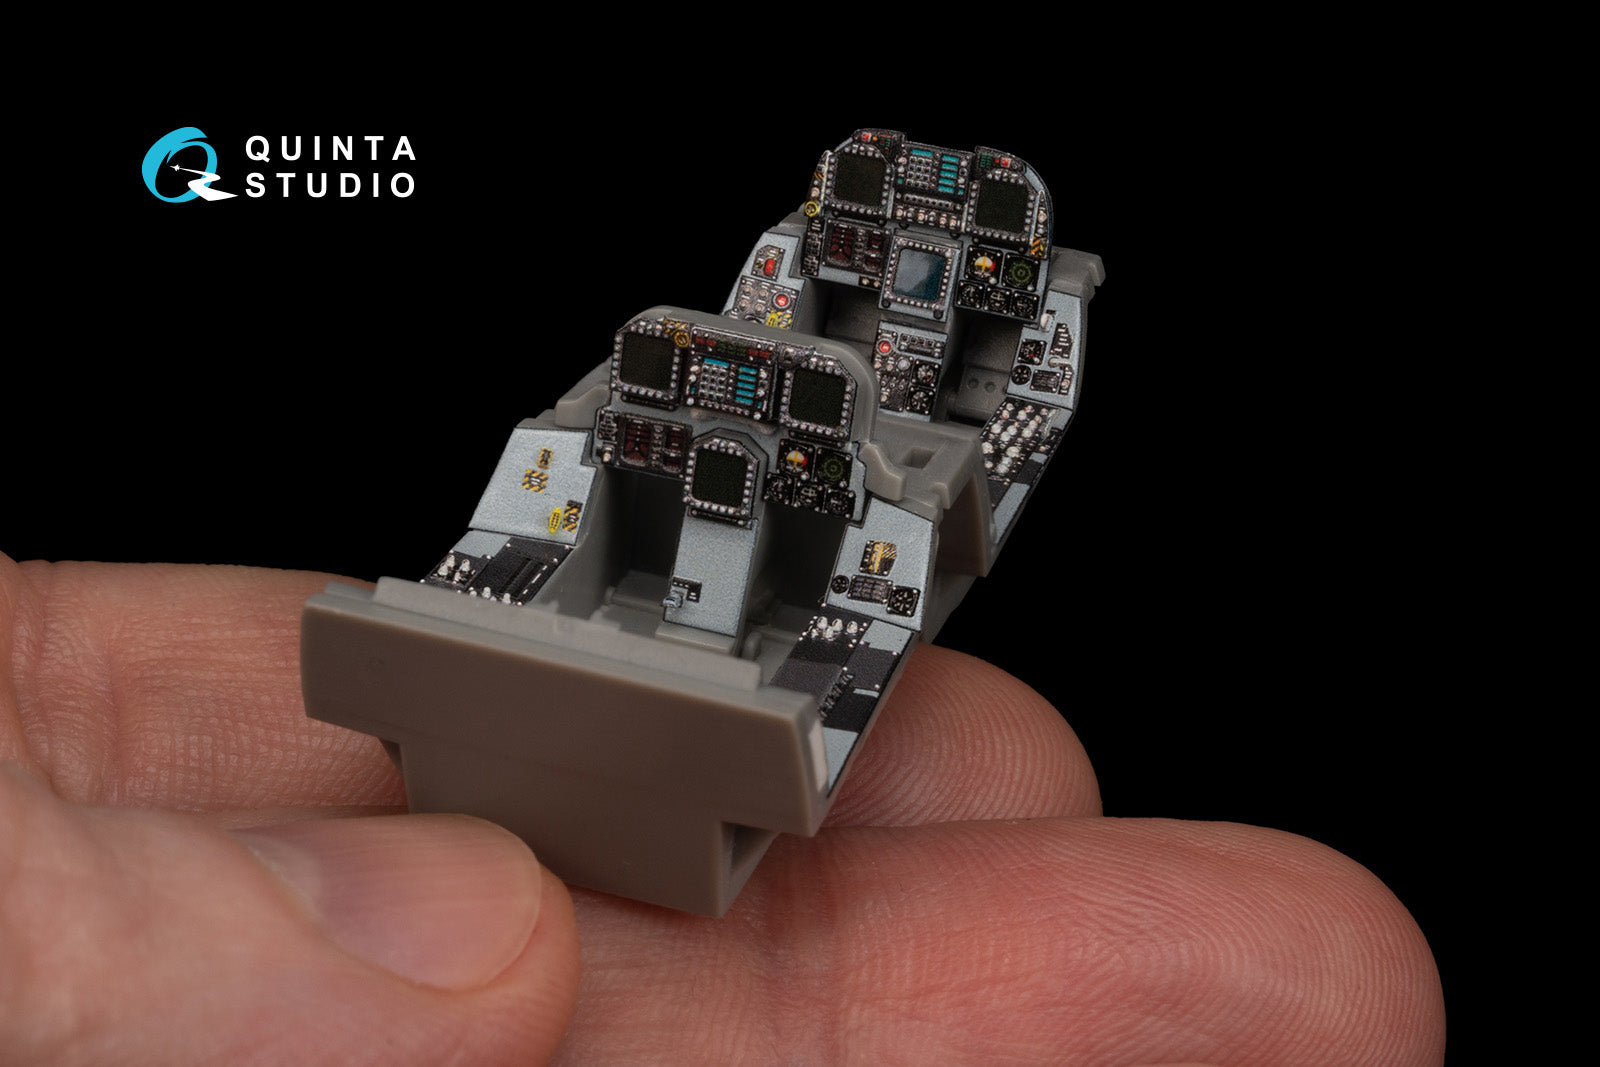 Quinta Studio - 1/48  F/A-18D - QD48215 for Kinetic kit